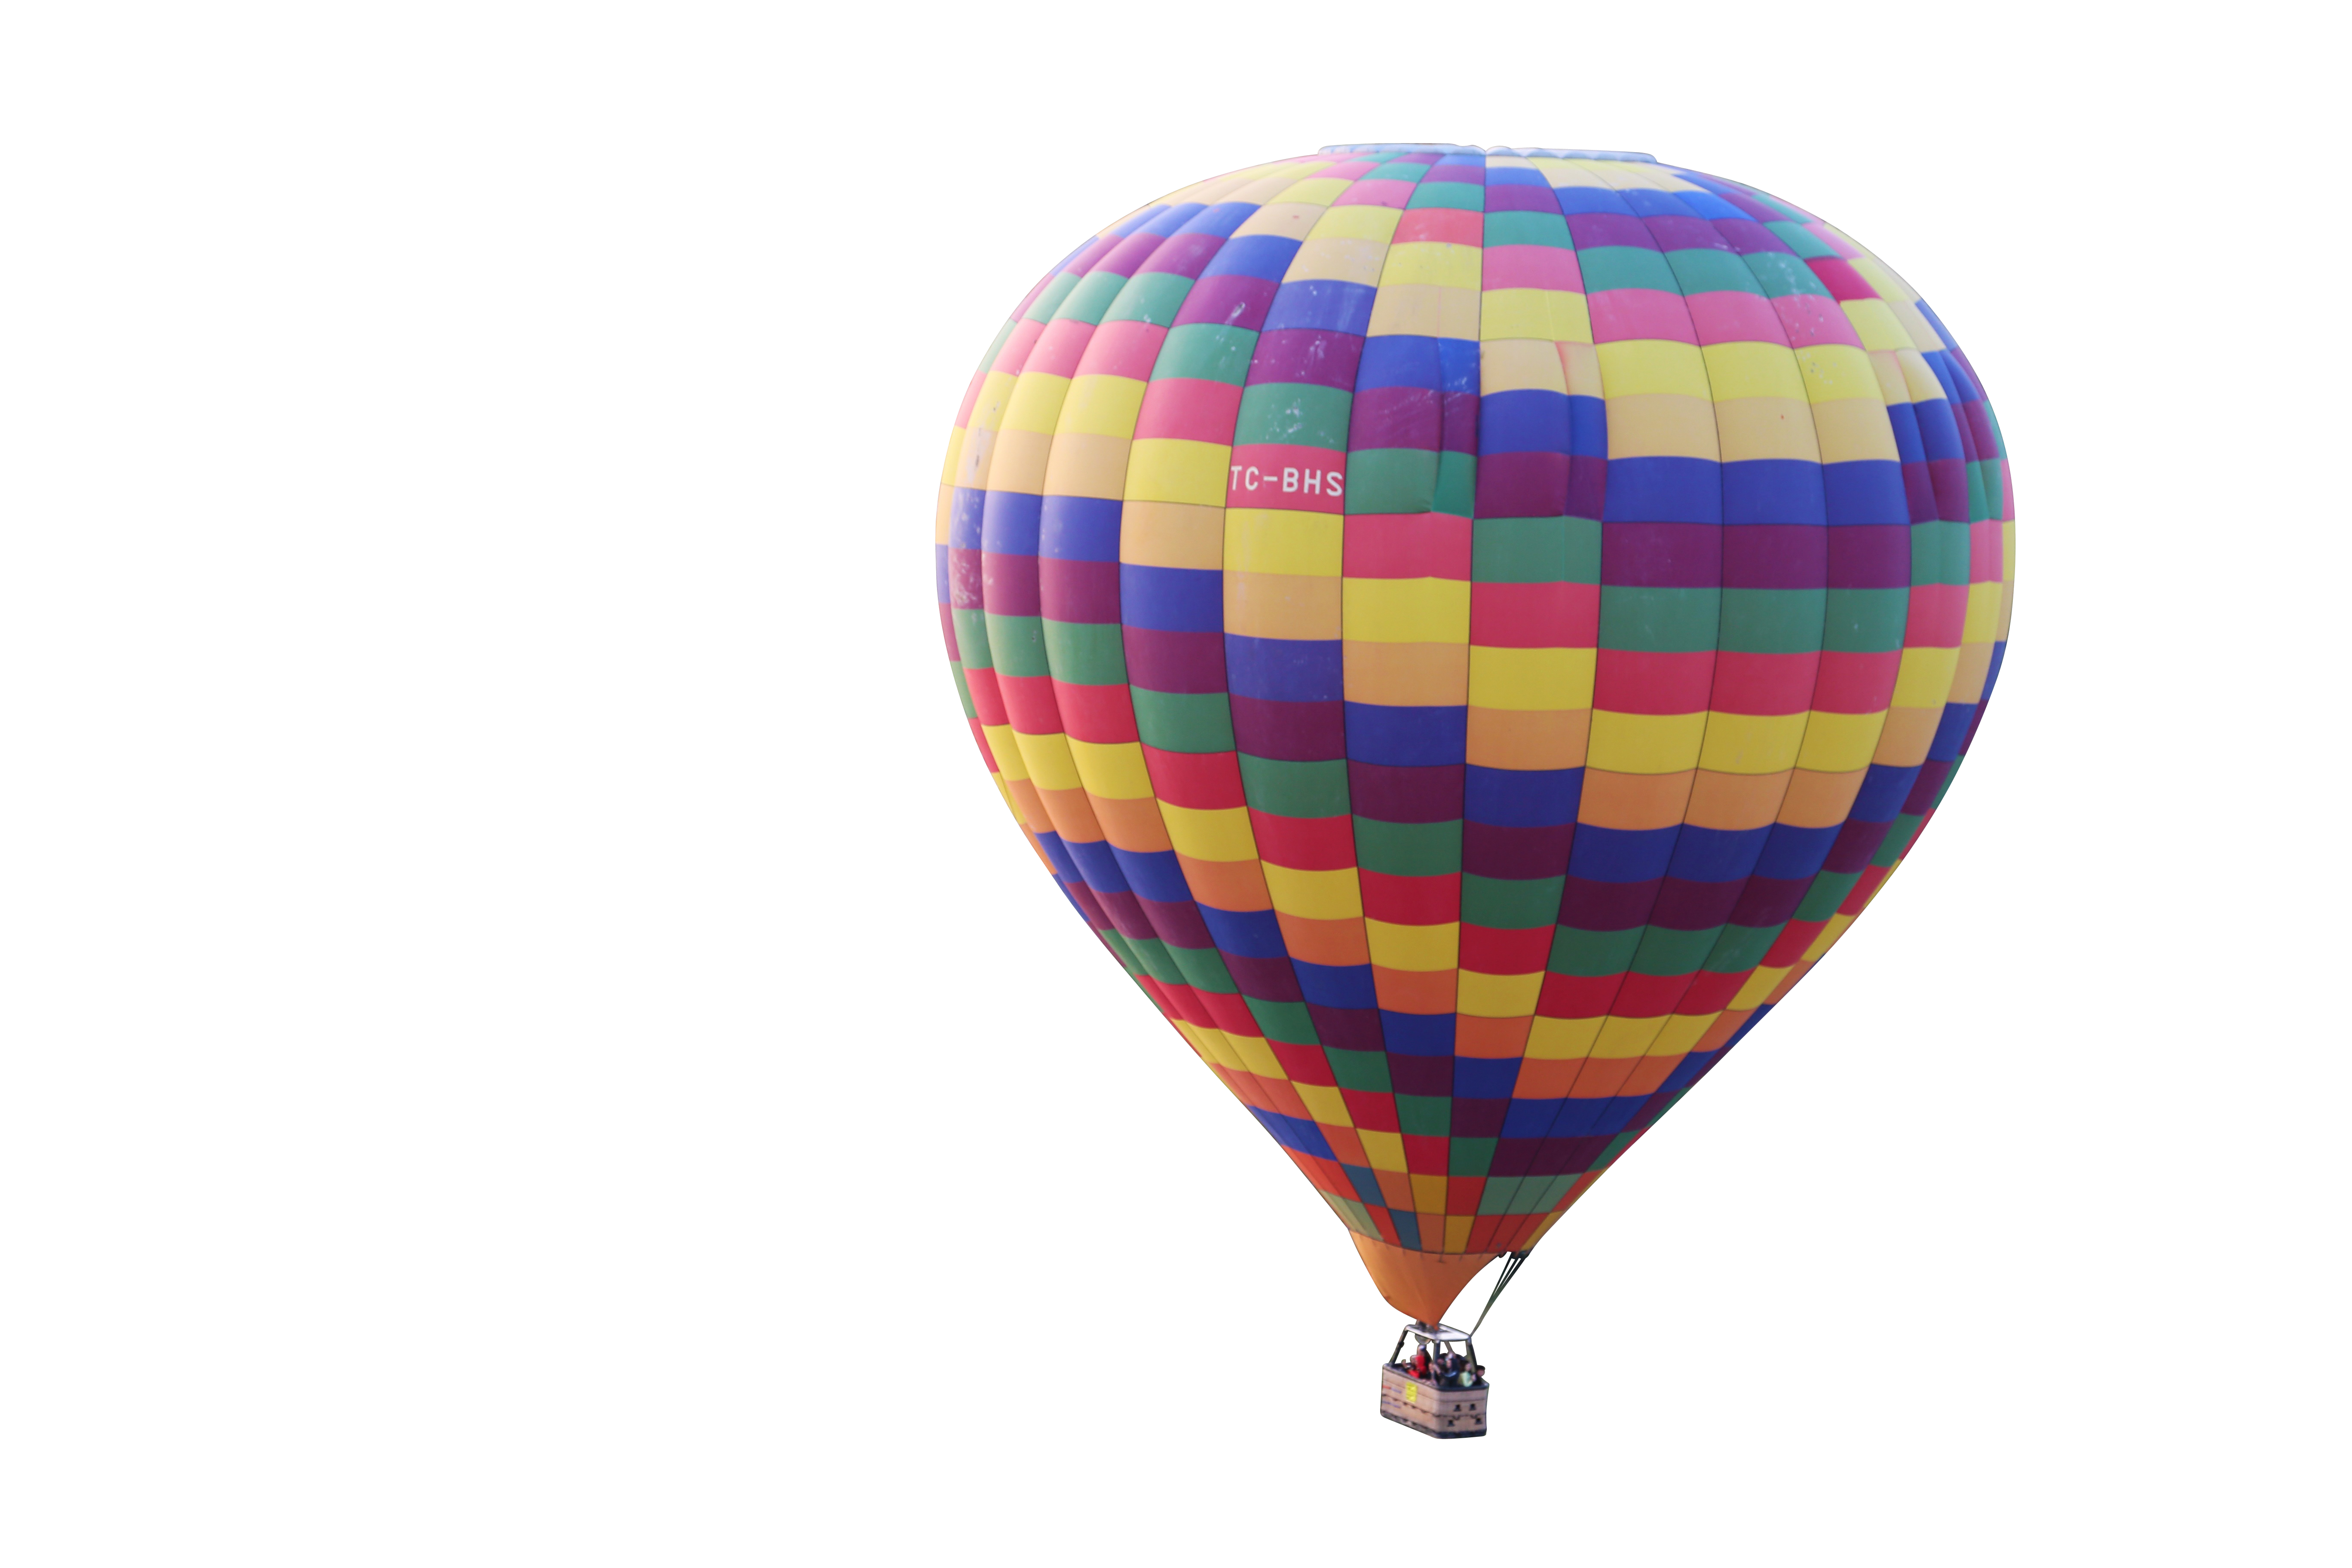 A Hot Air Balloon In The Sky